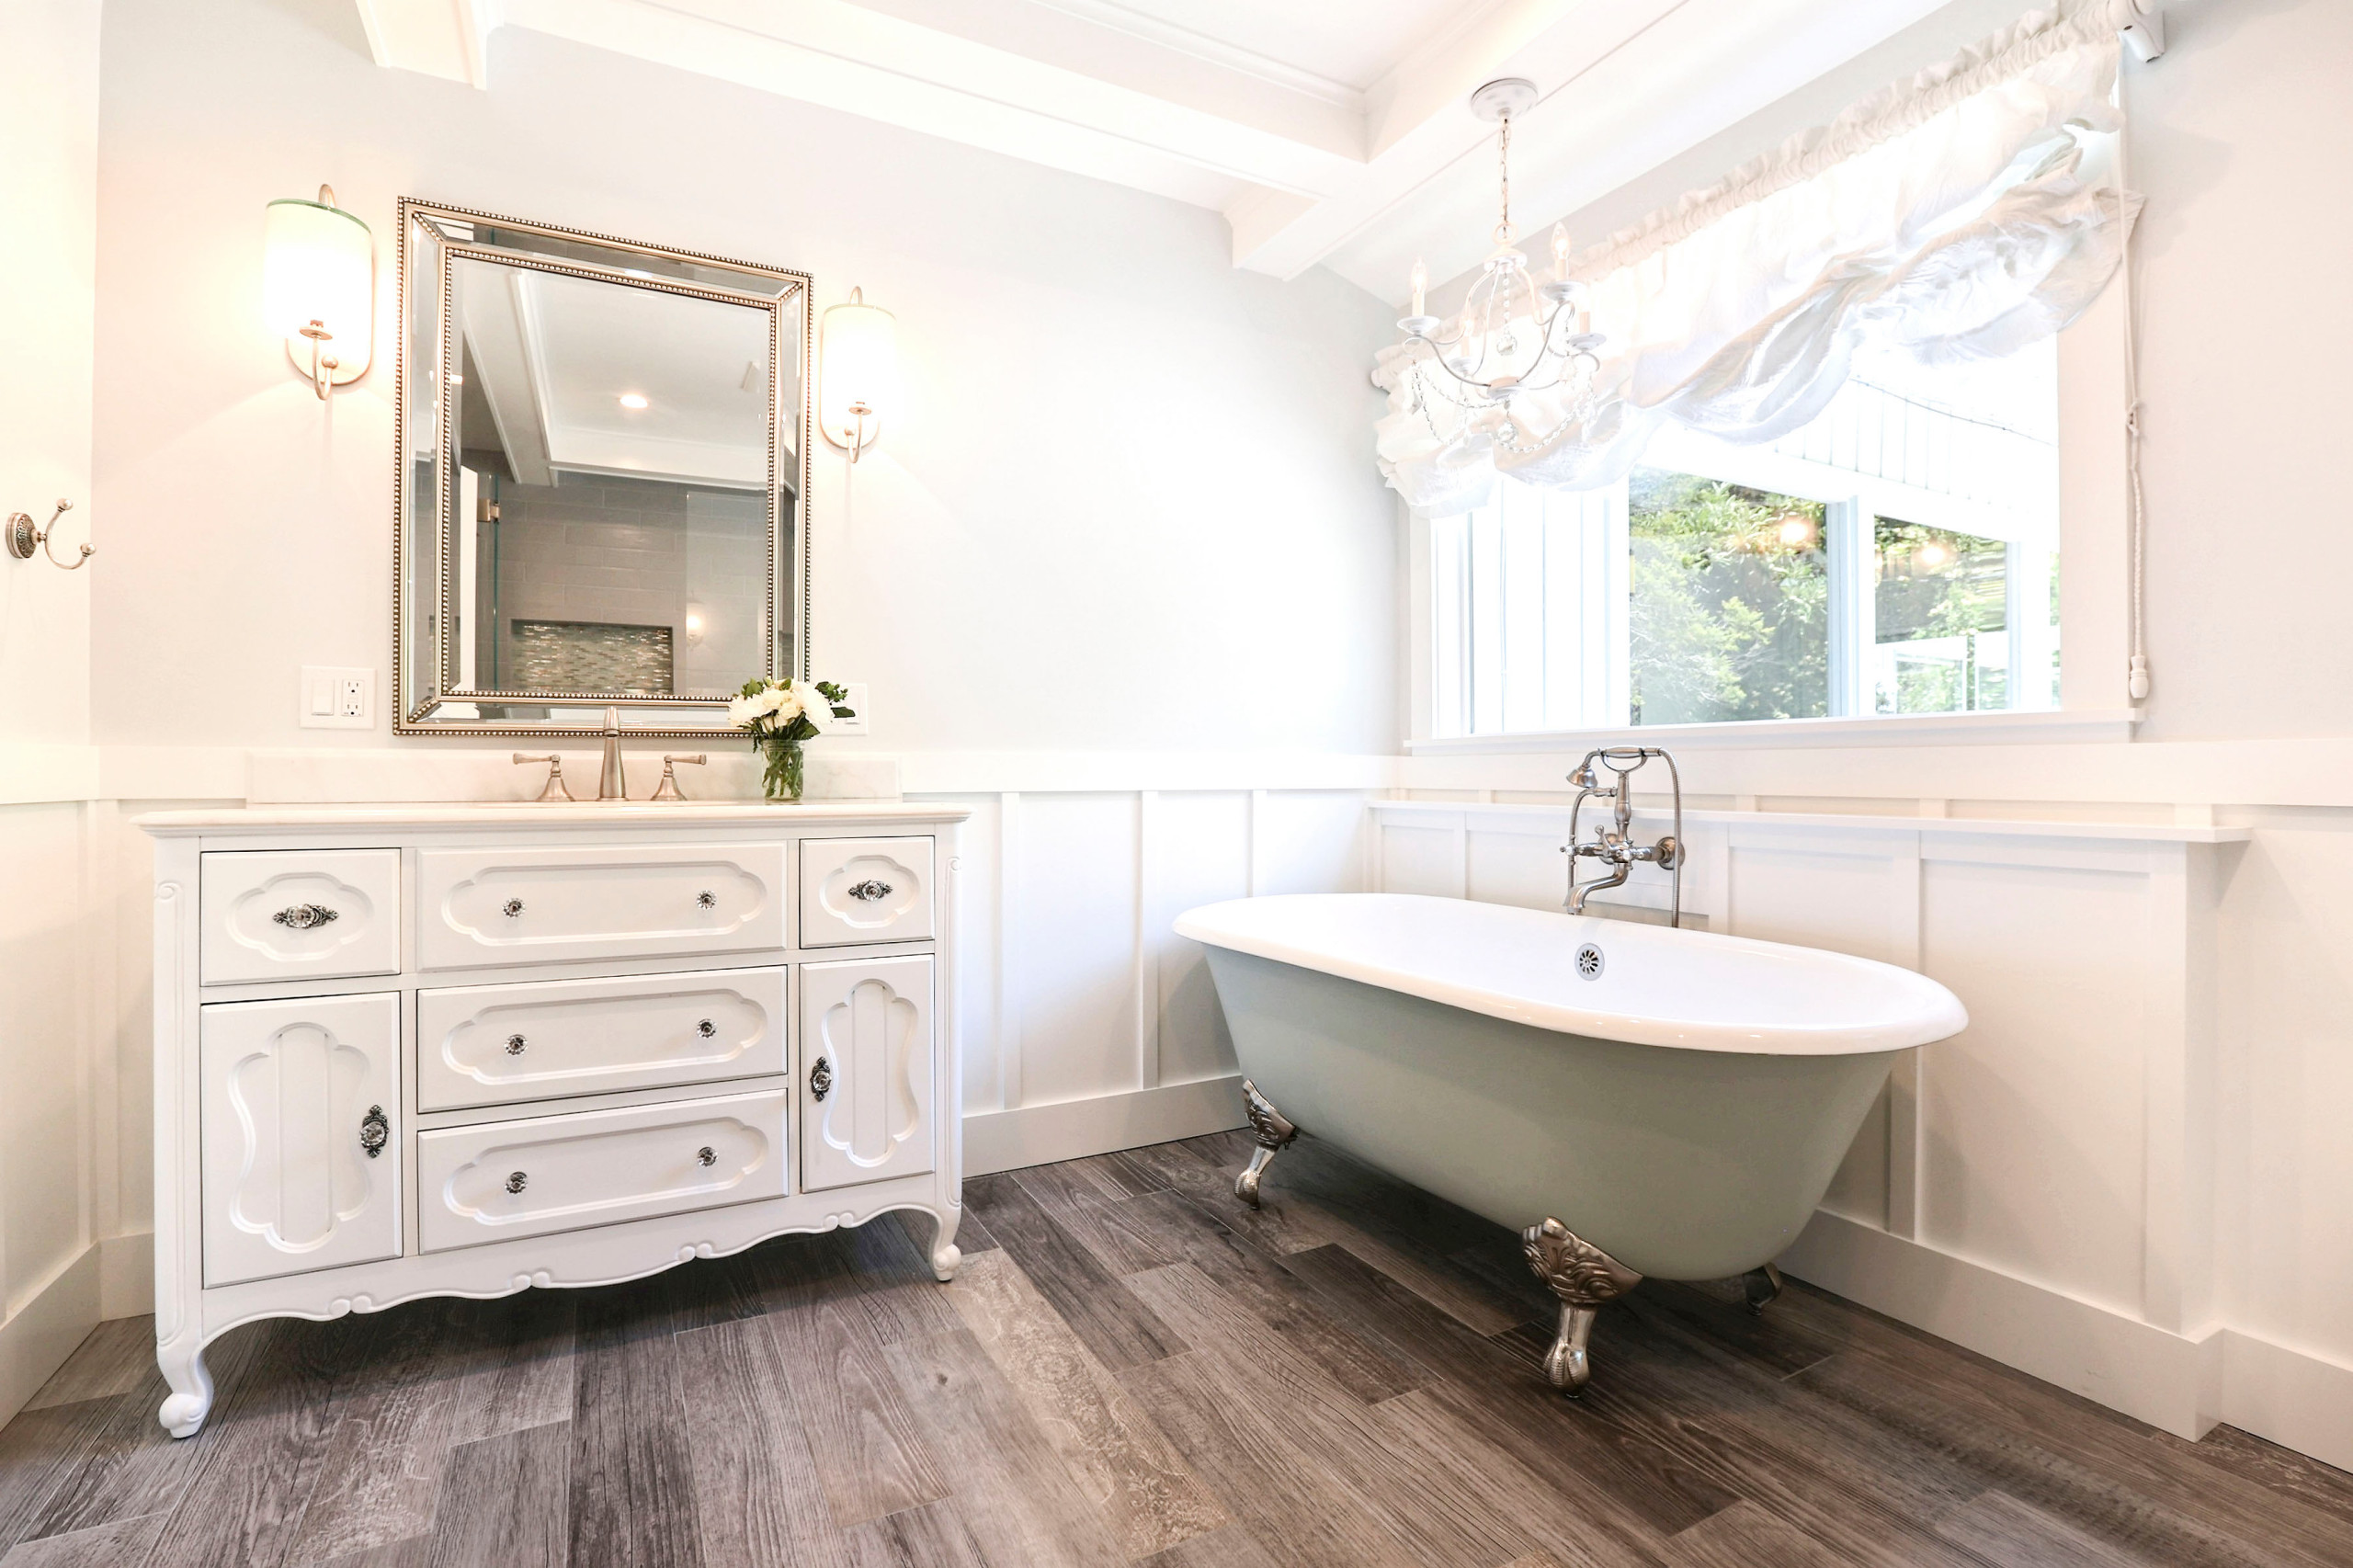 75 Wood Look Tile Floor Master Bathroom, Wood Look Tile Bathroom Floor Ideas